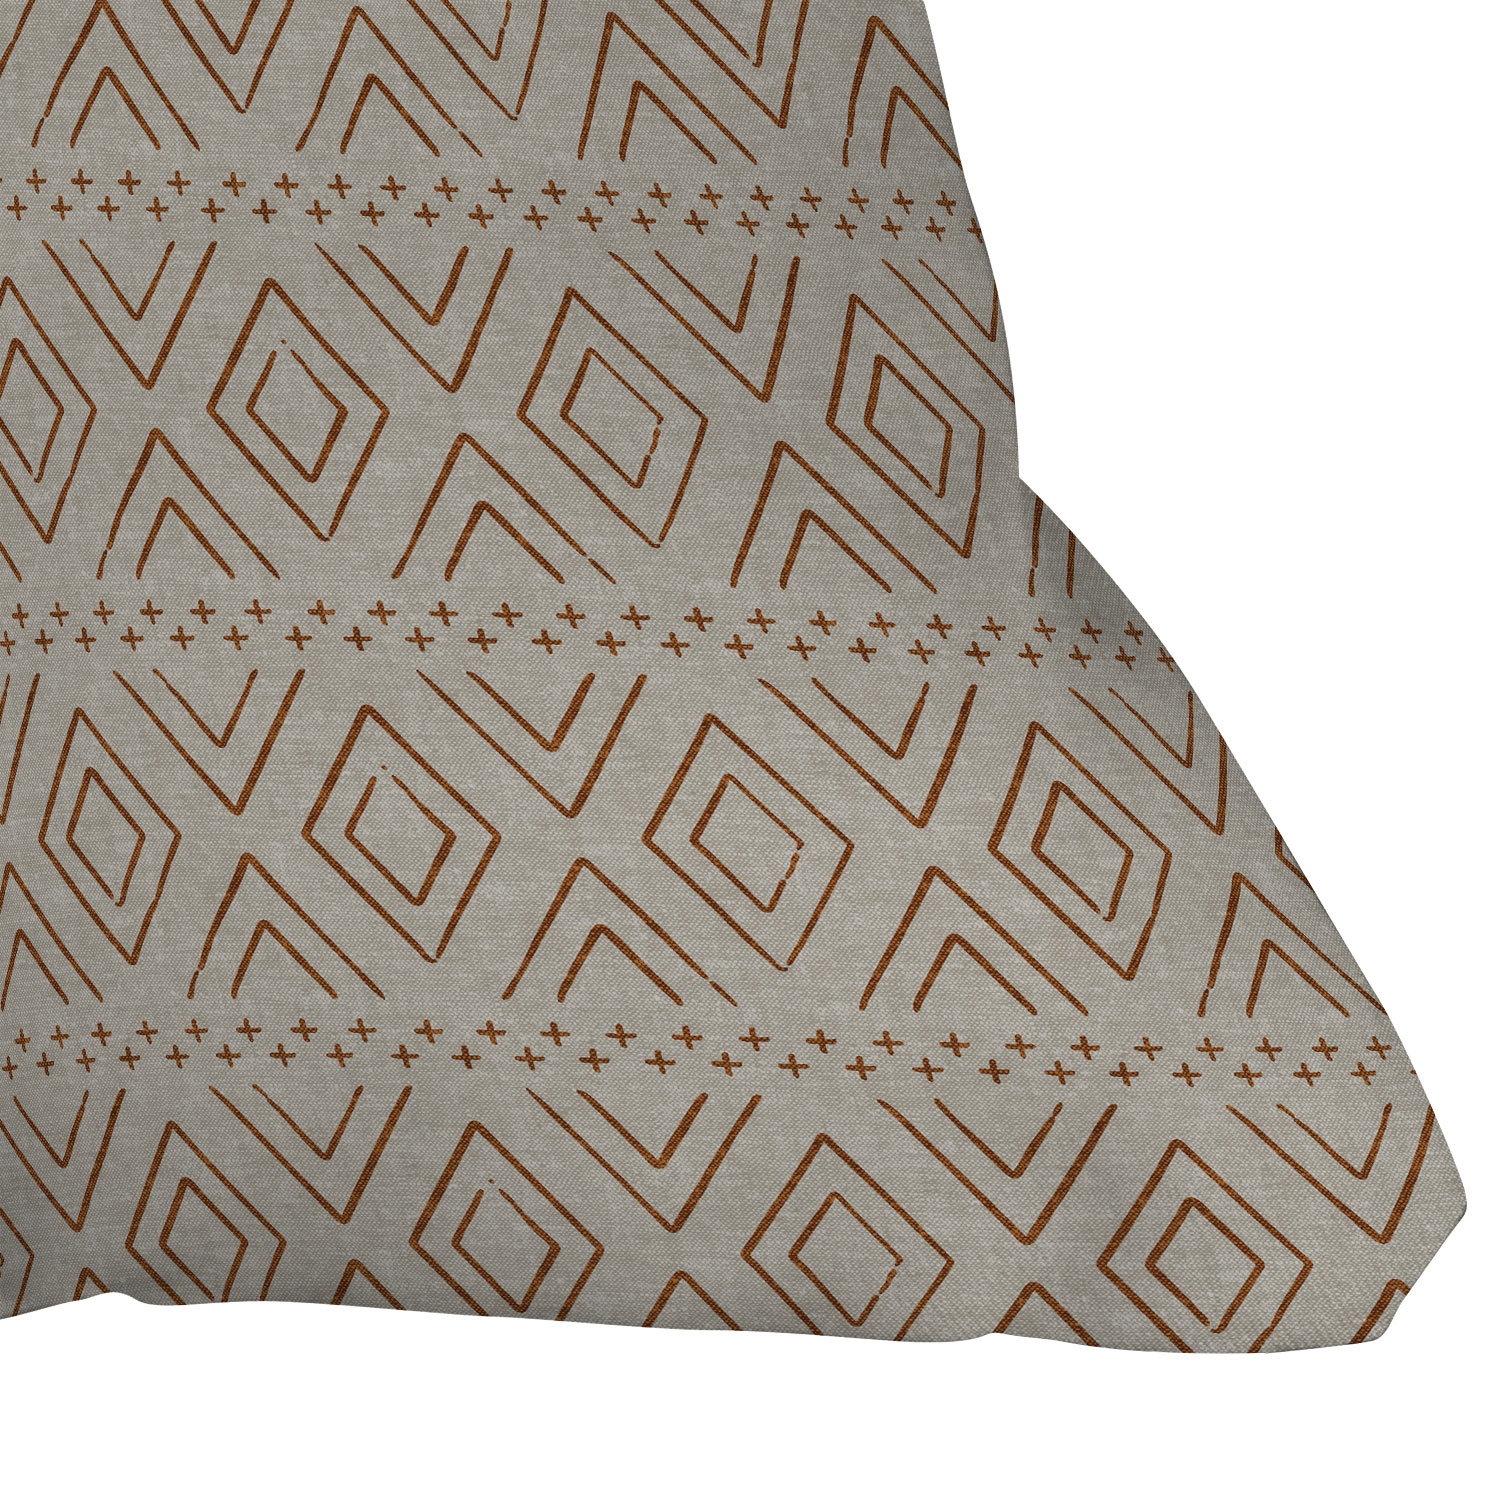 Farmhouse Diamonds Rust by Little Arrow Design Co - Outdoor Throw Pillow 16" x 16" - Image 2